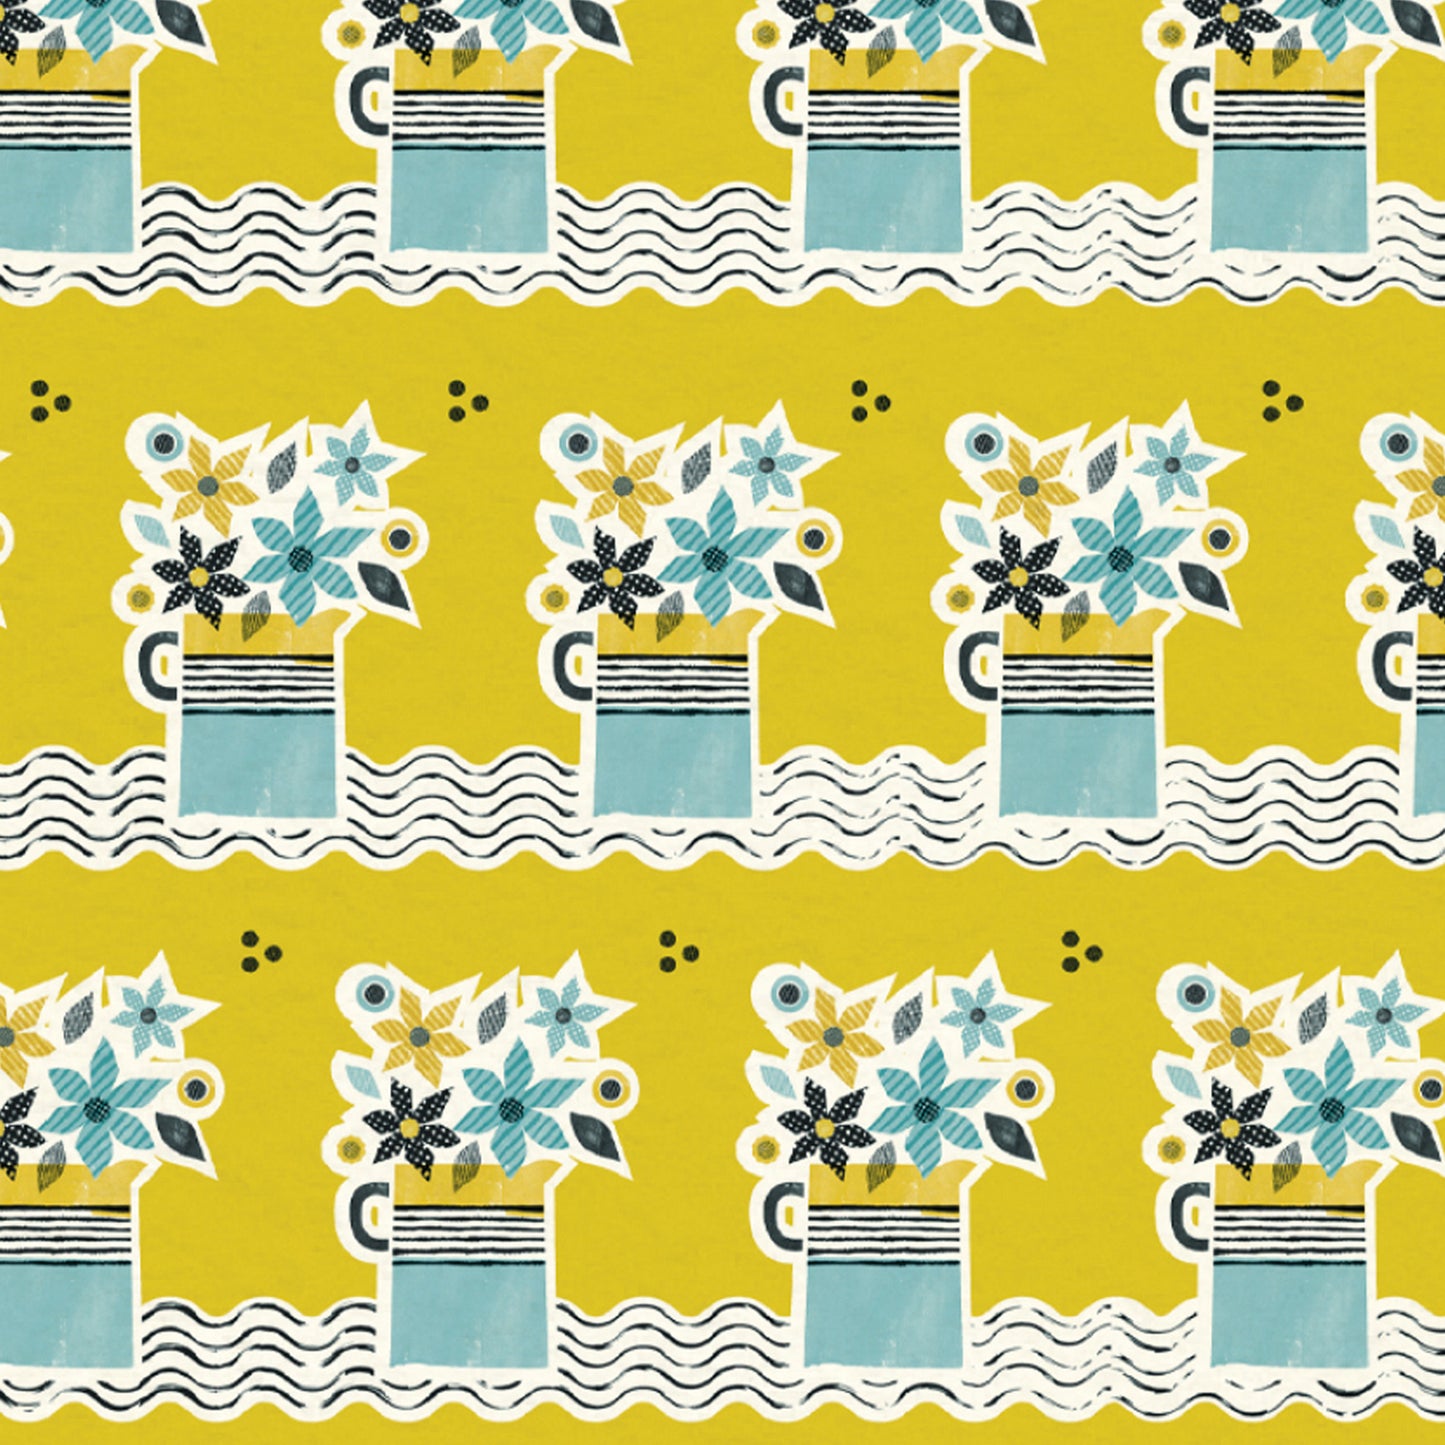 Just Patterns: Flower Jugs, Yellow